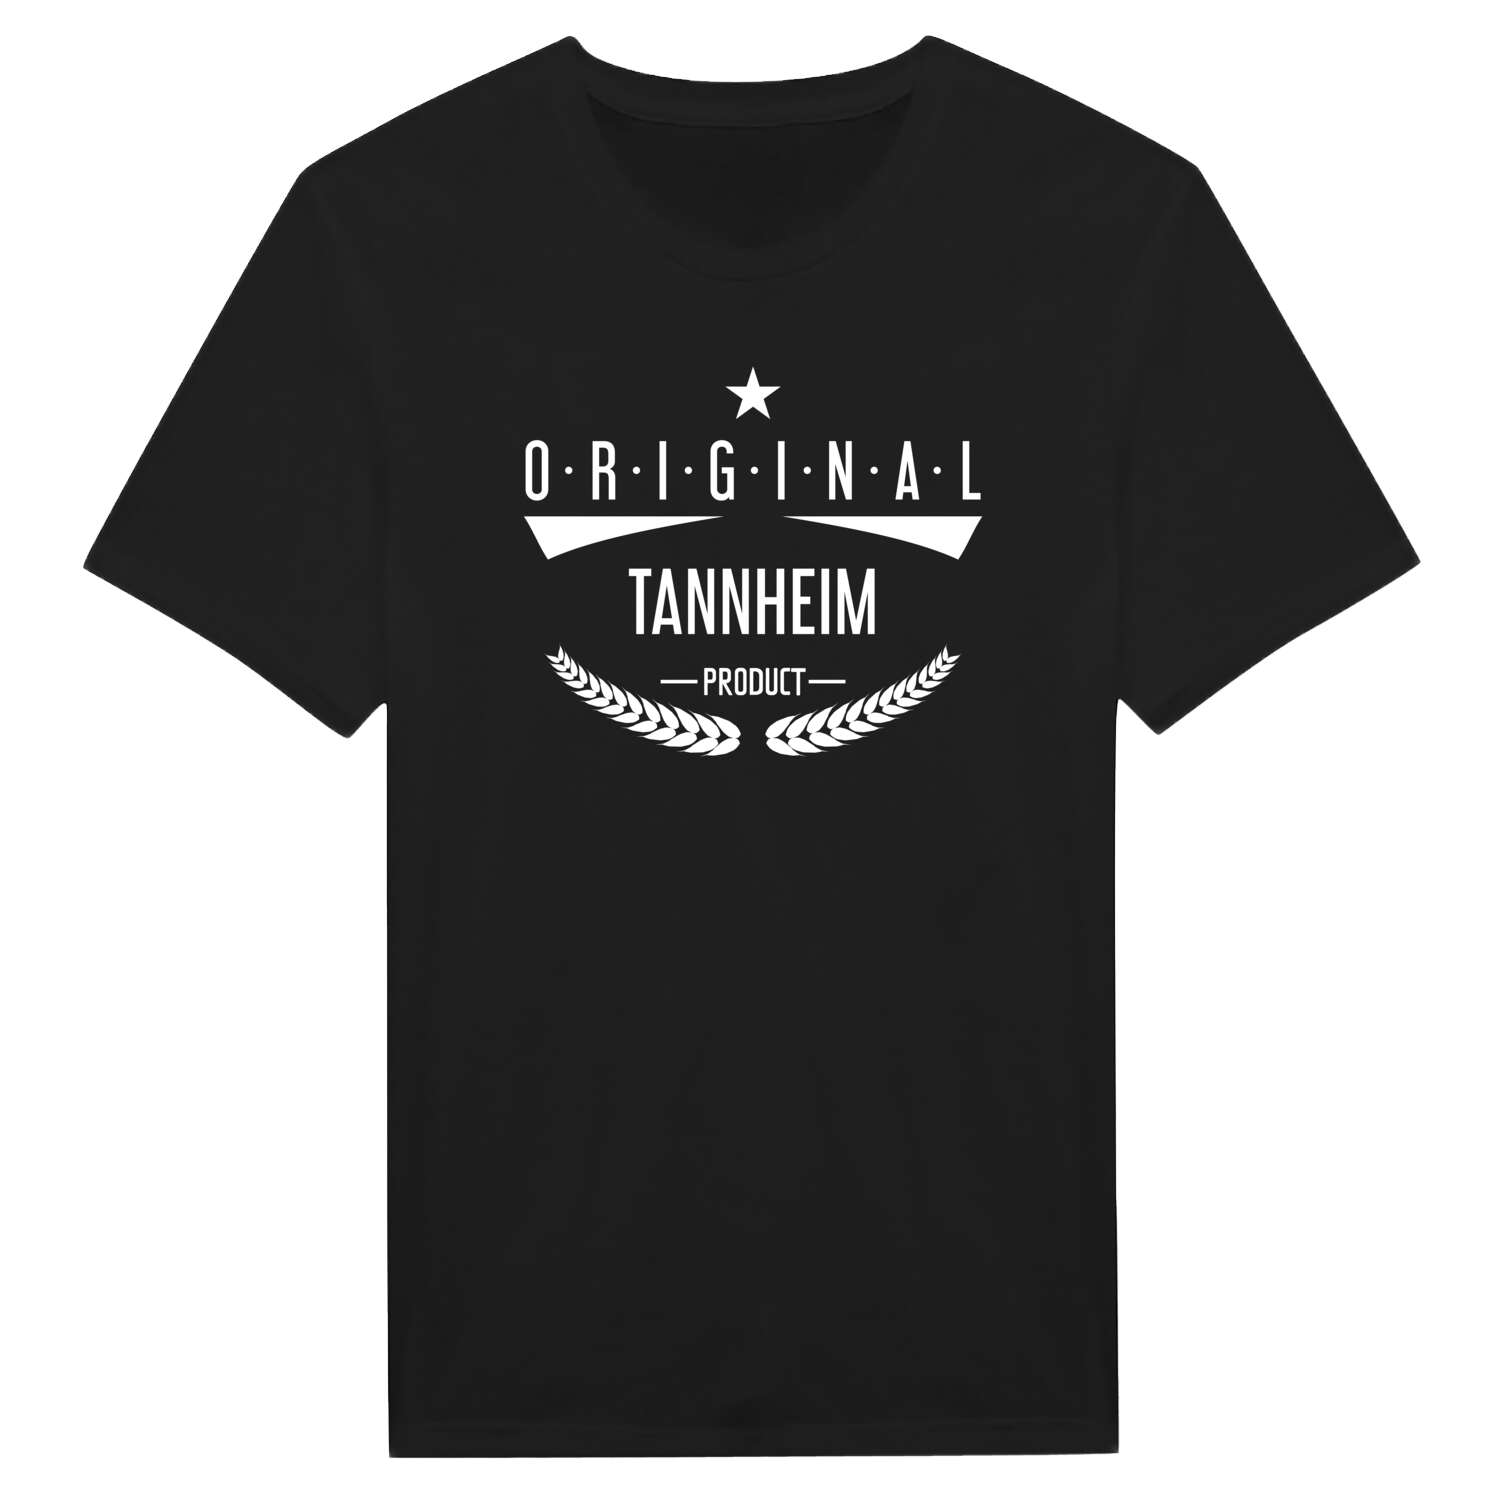 Tannheim T-Shirt »Original Product«